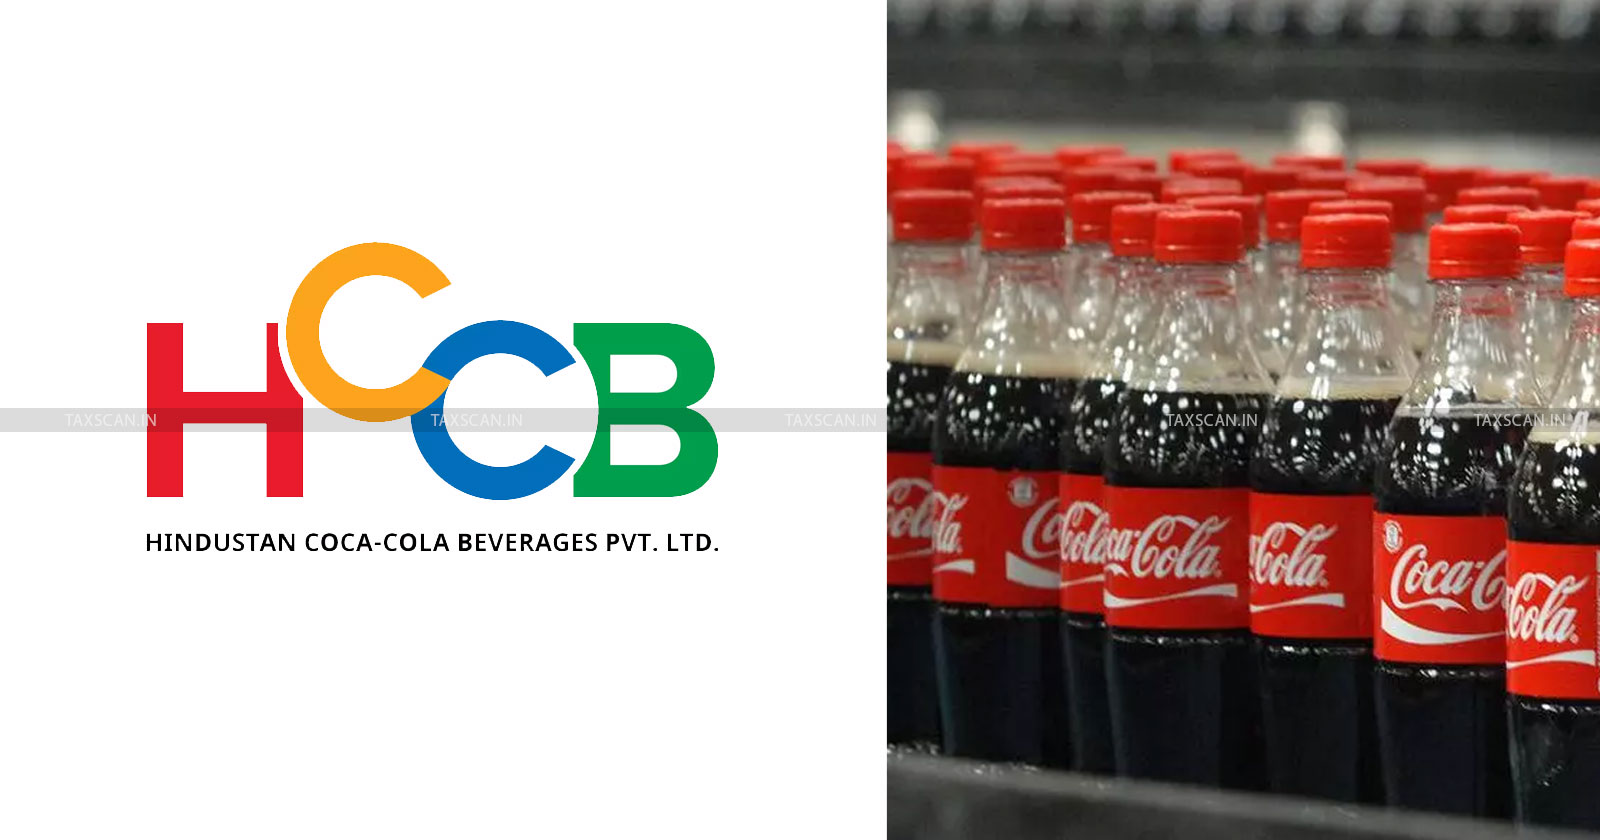 Hindustan Coca-Cola Beverages Ltd - CESTAT - Mumbai bench - CENVAT Credit Rules - taxscan